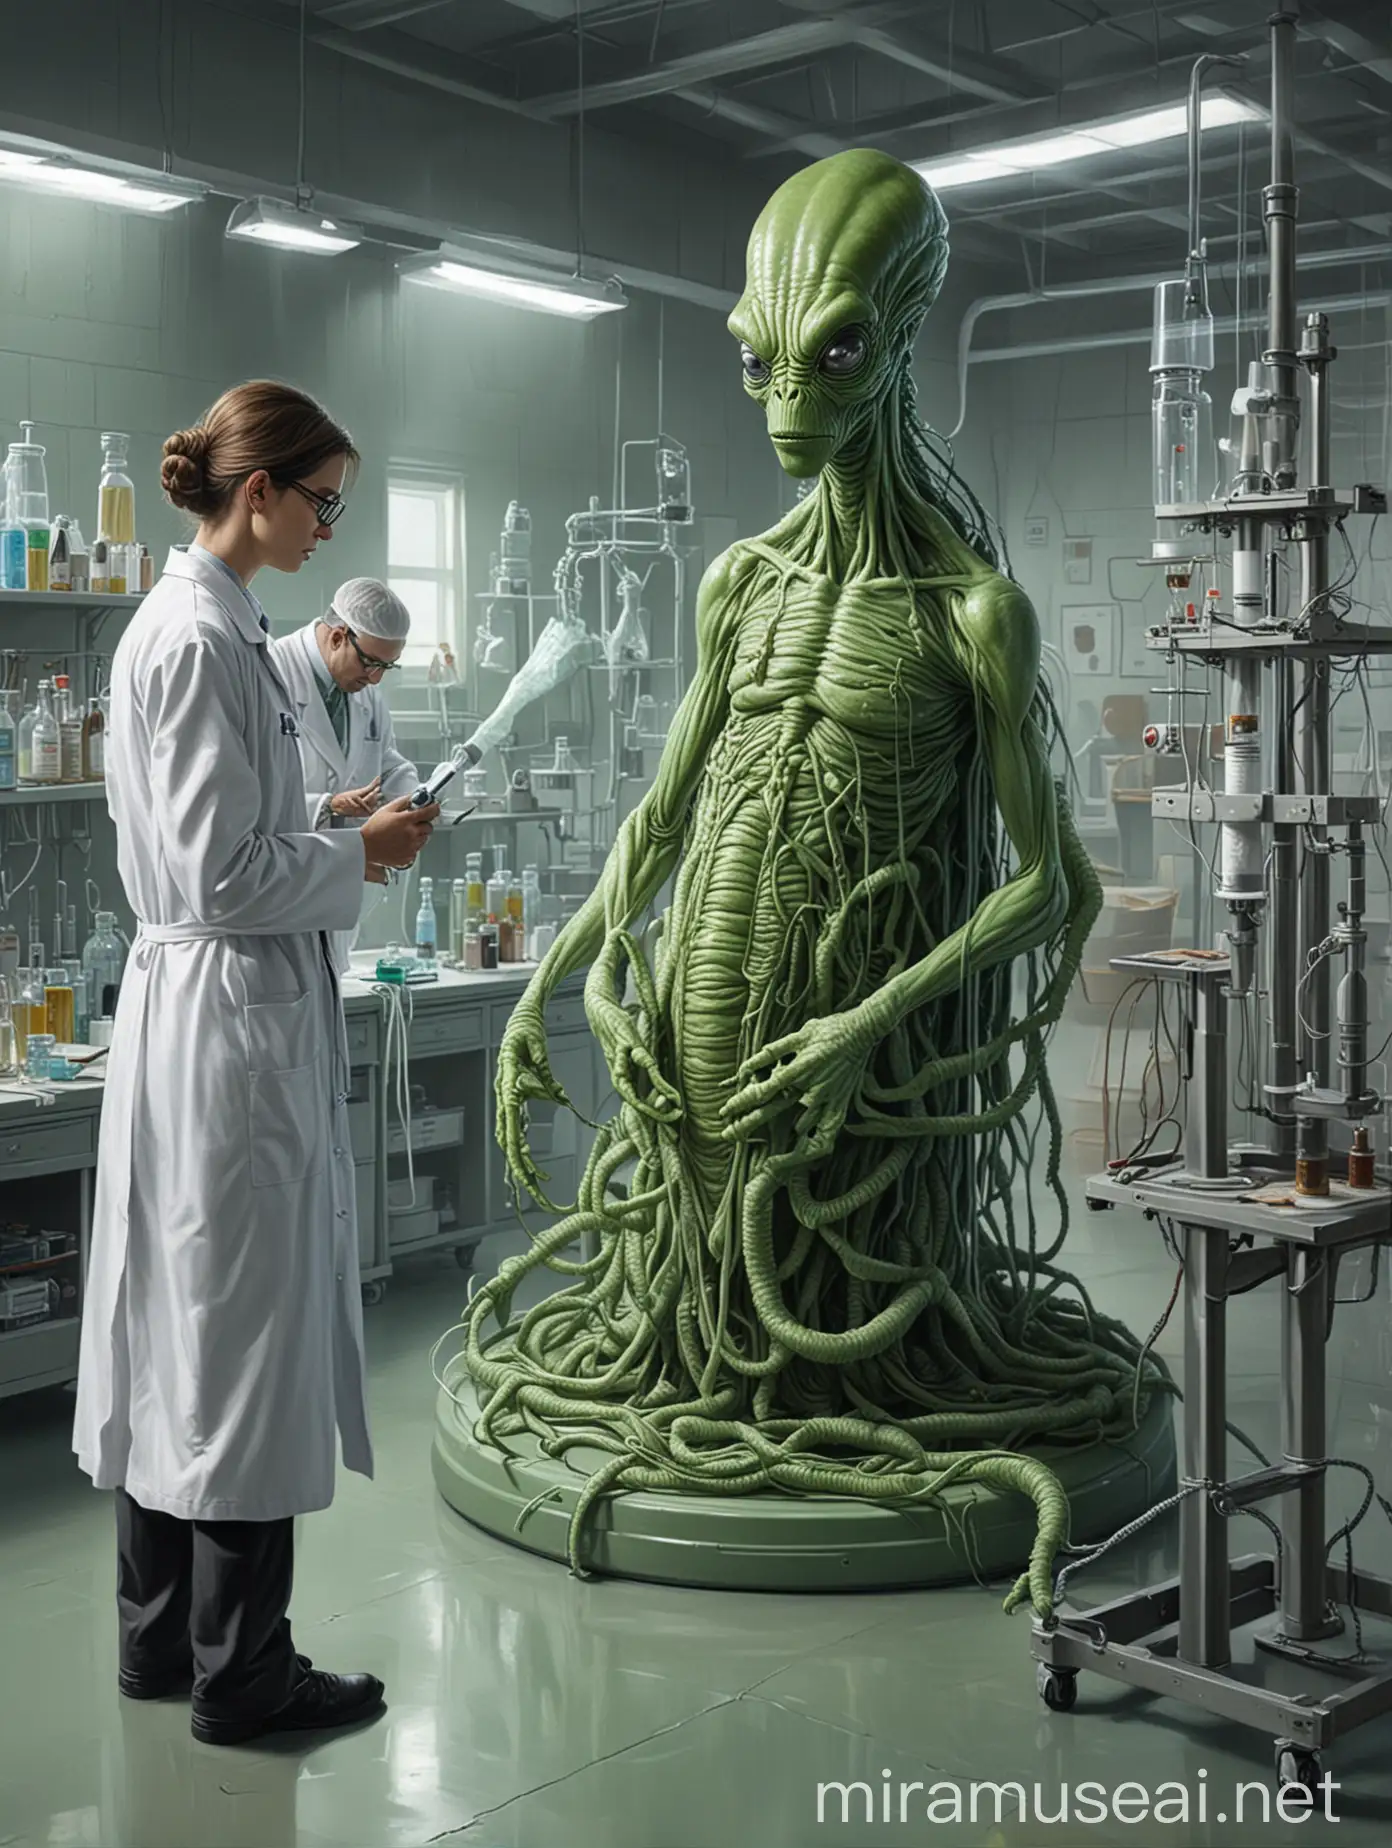 Scientific Experiment Researchers Study Green Alien Creature in Laboratory Setting